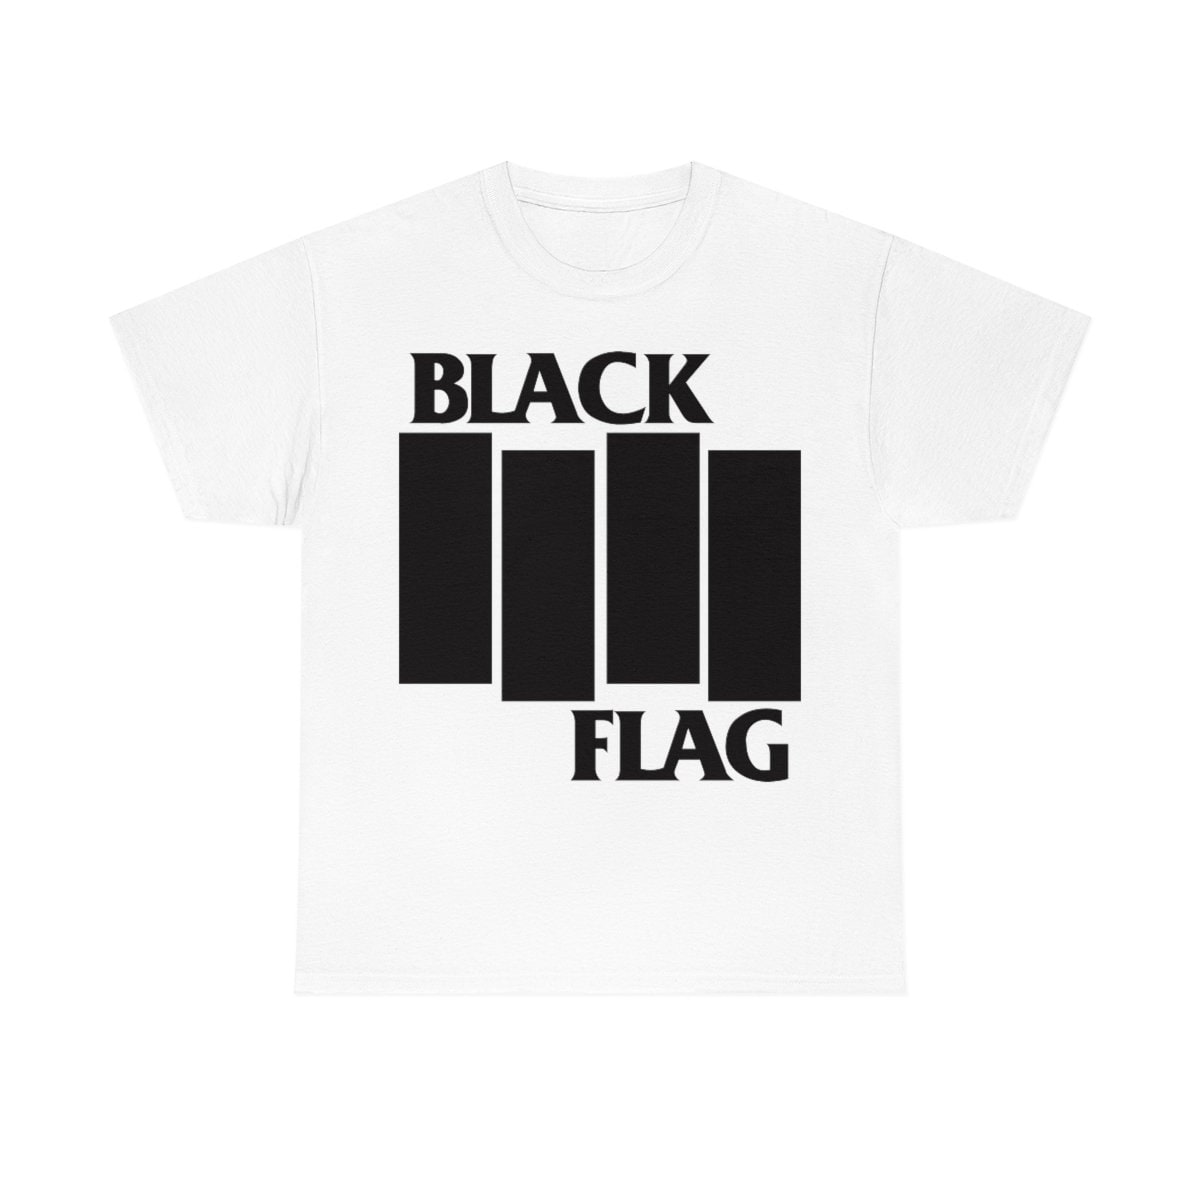 Discover Black Flag T Shirt SoCal Hardcore Henry Rollins T-Shirt